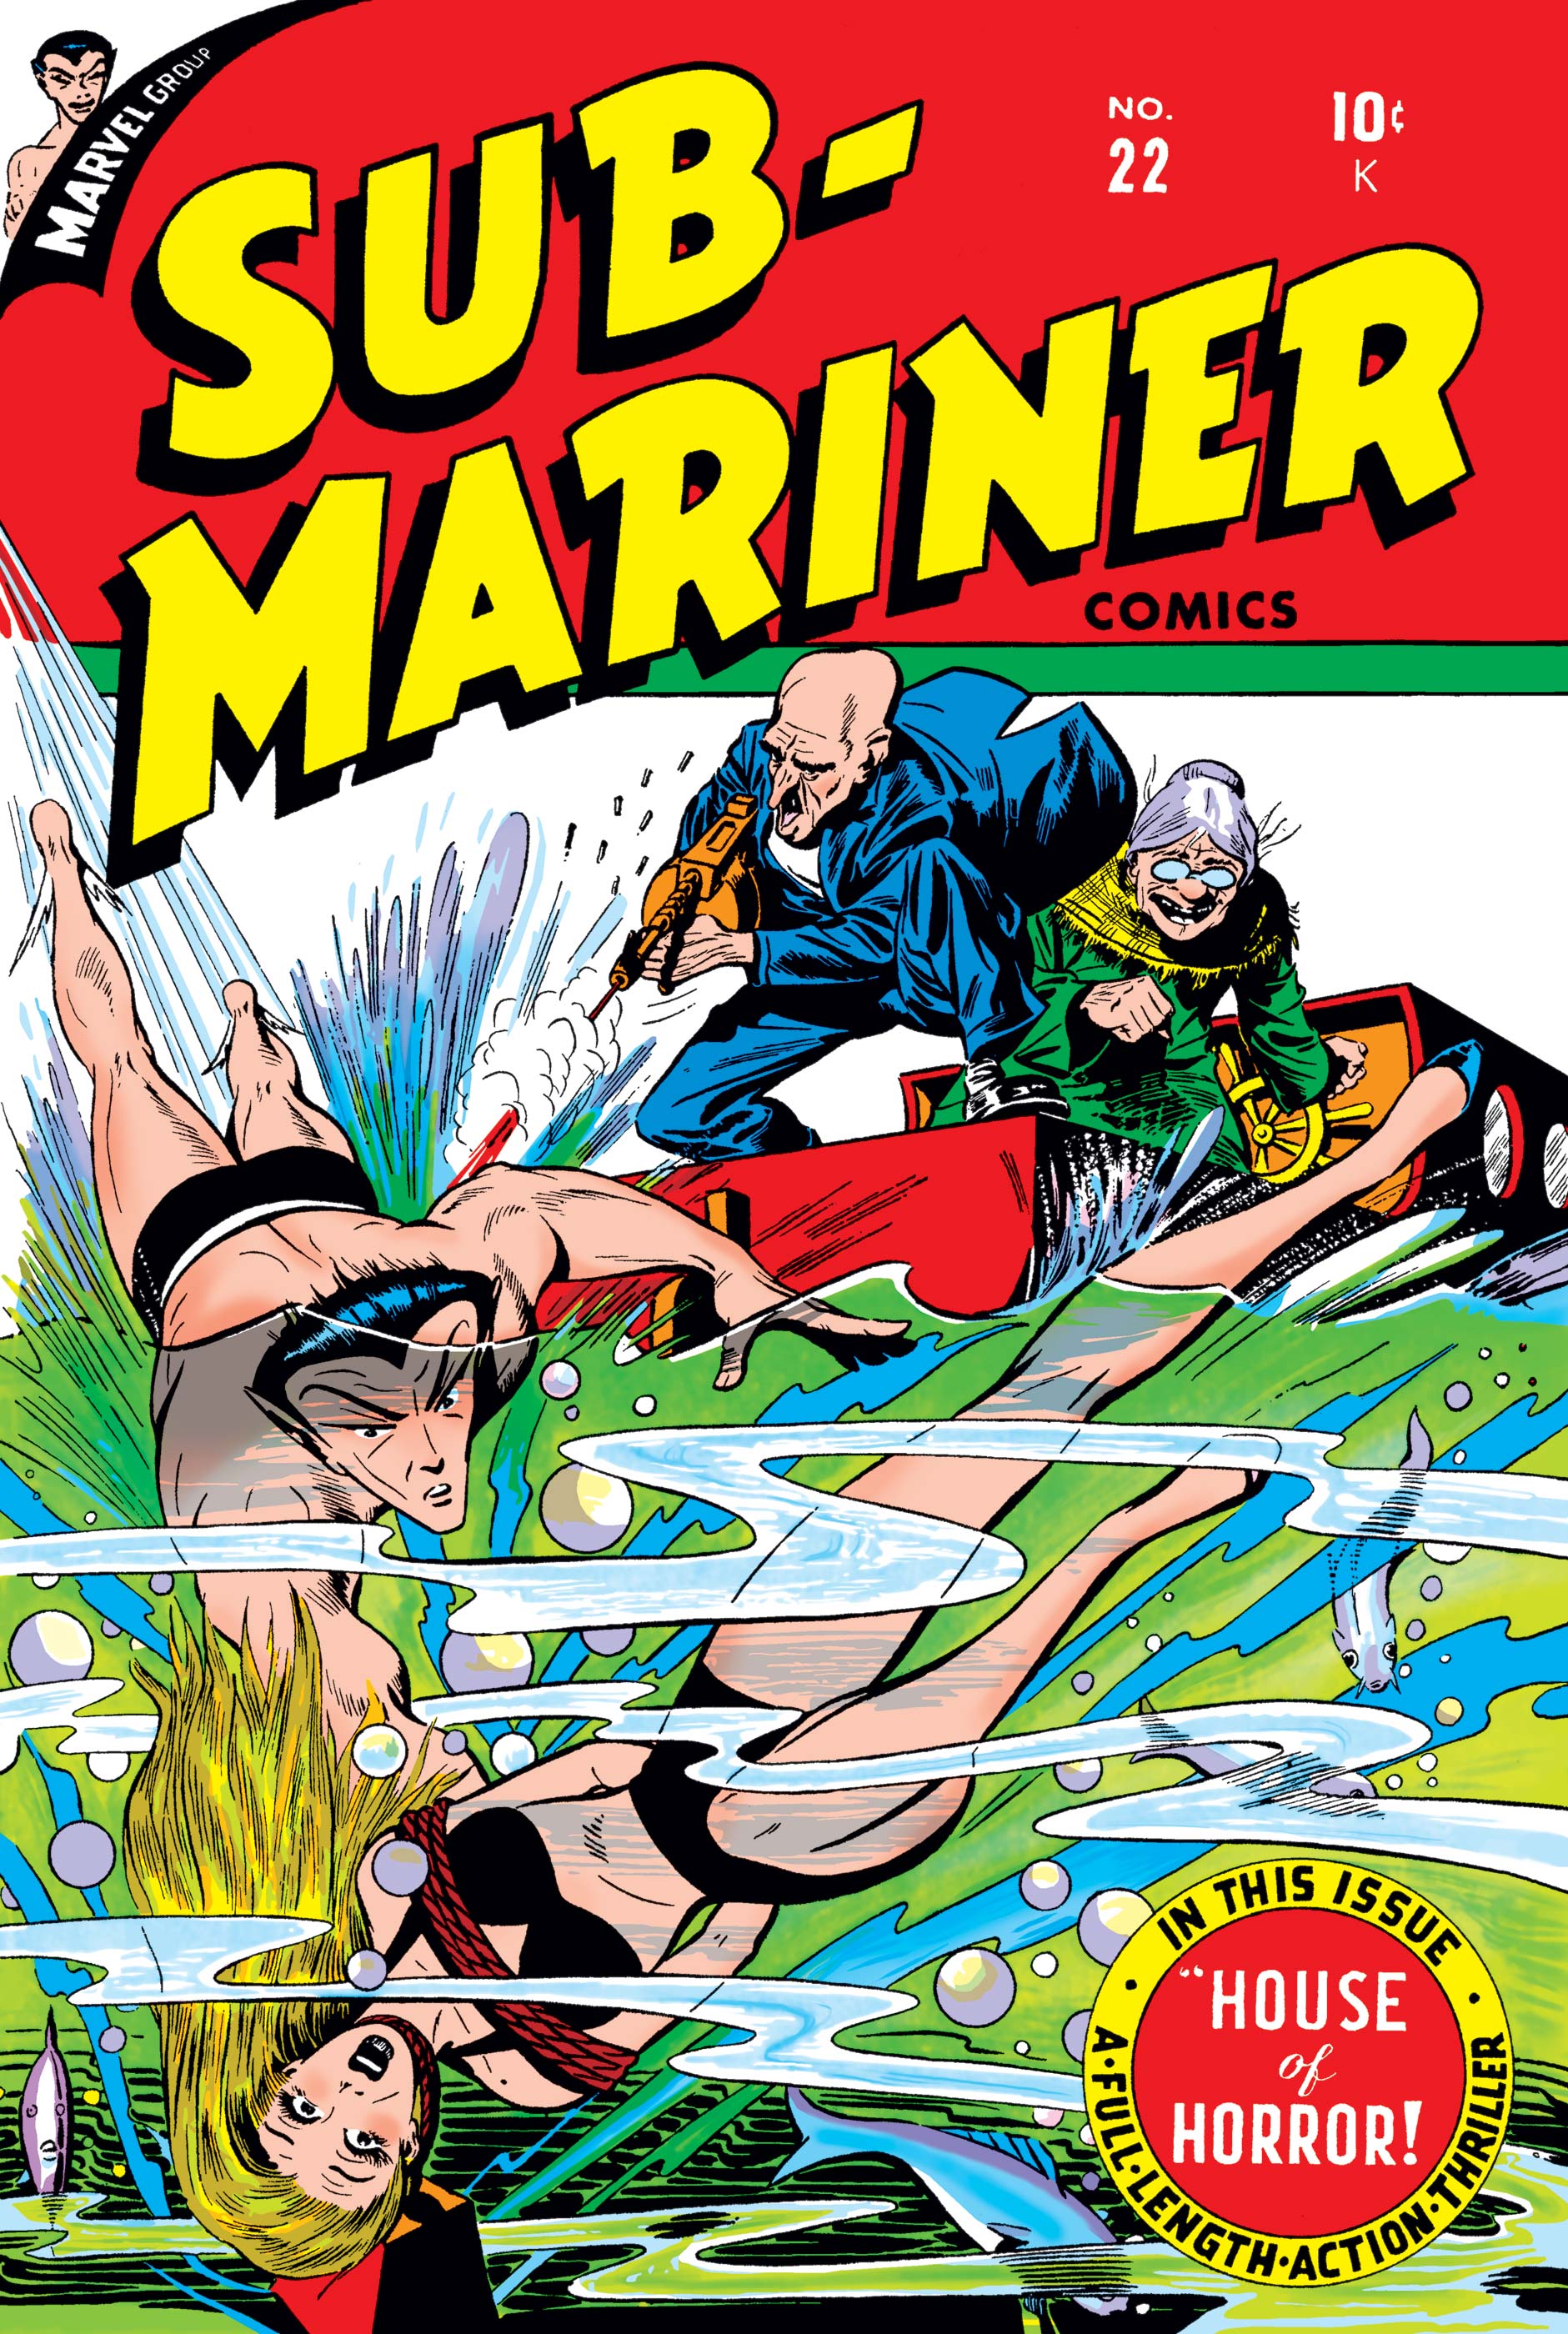 Sub-Mariner Comics (1941) #22